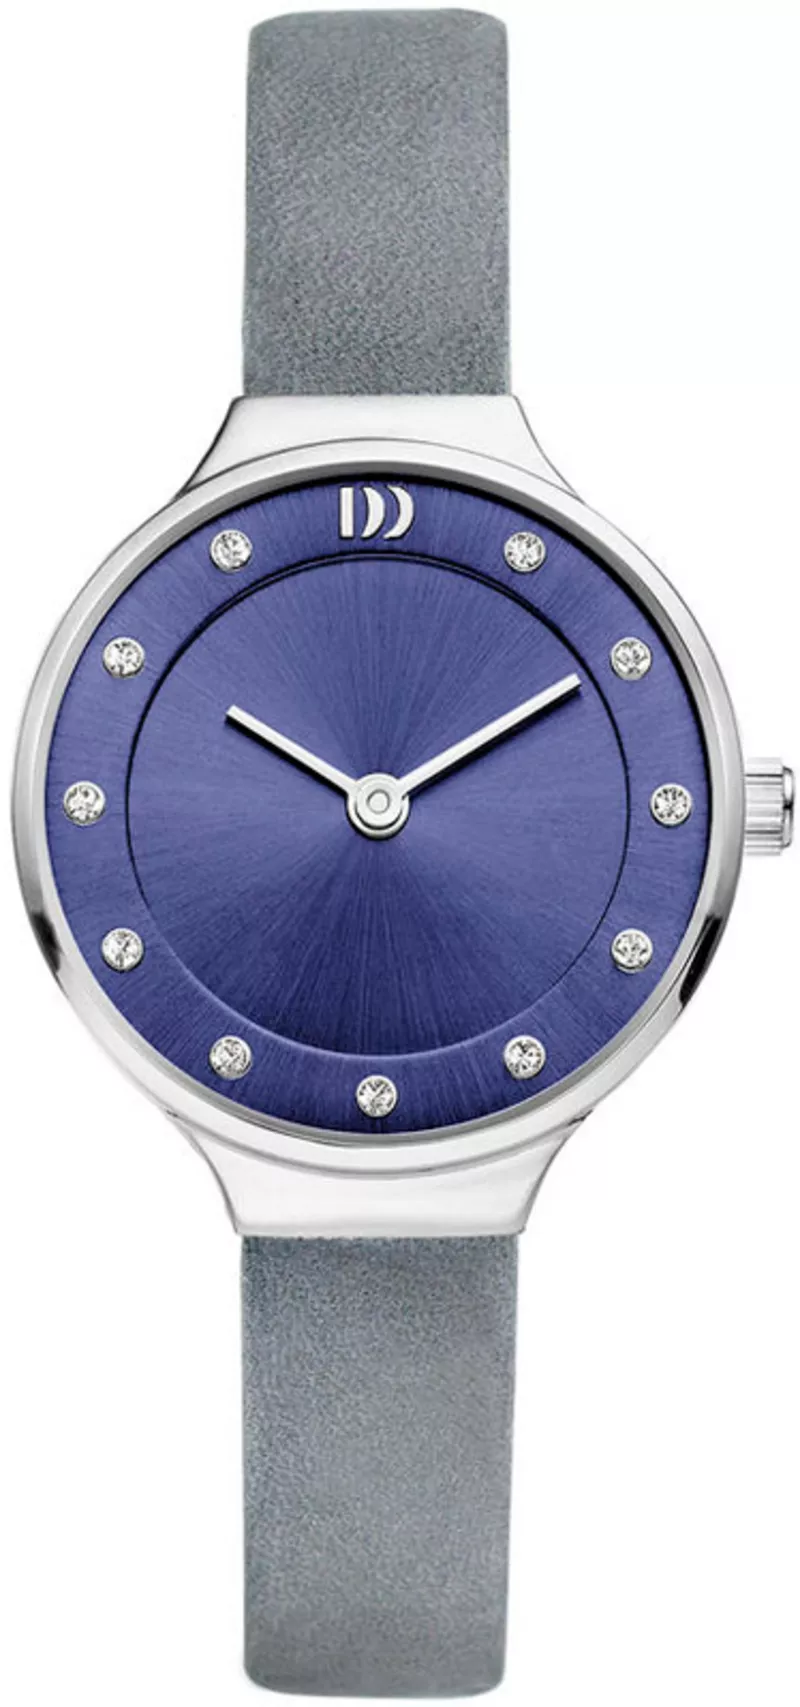 Часы Danish Design IV22Q1181